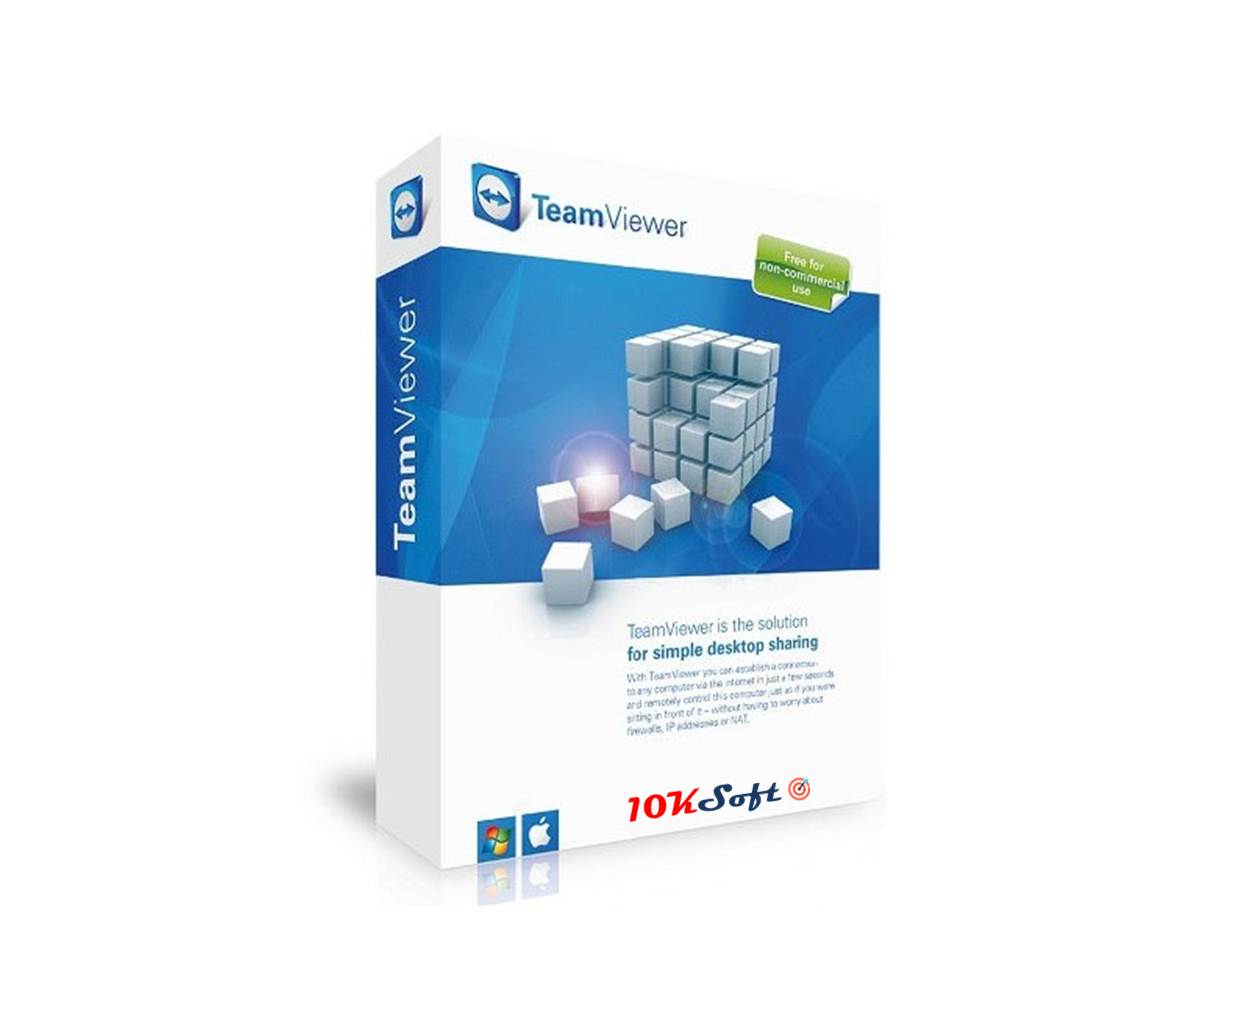 teamviewer 8 free download for windows 7 ultimate 64 bit